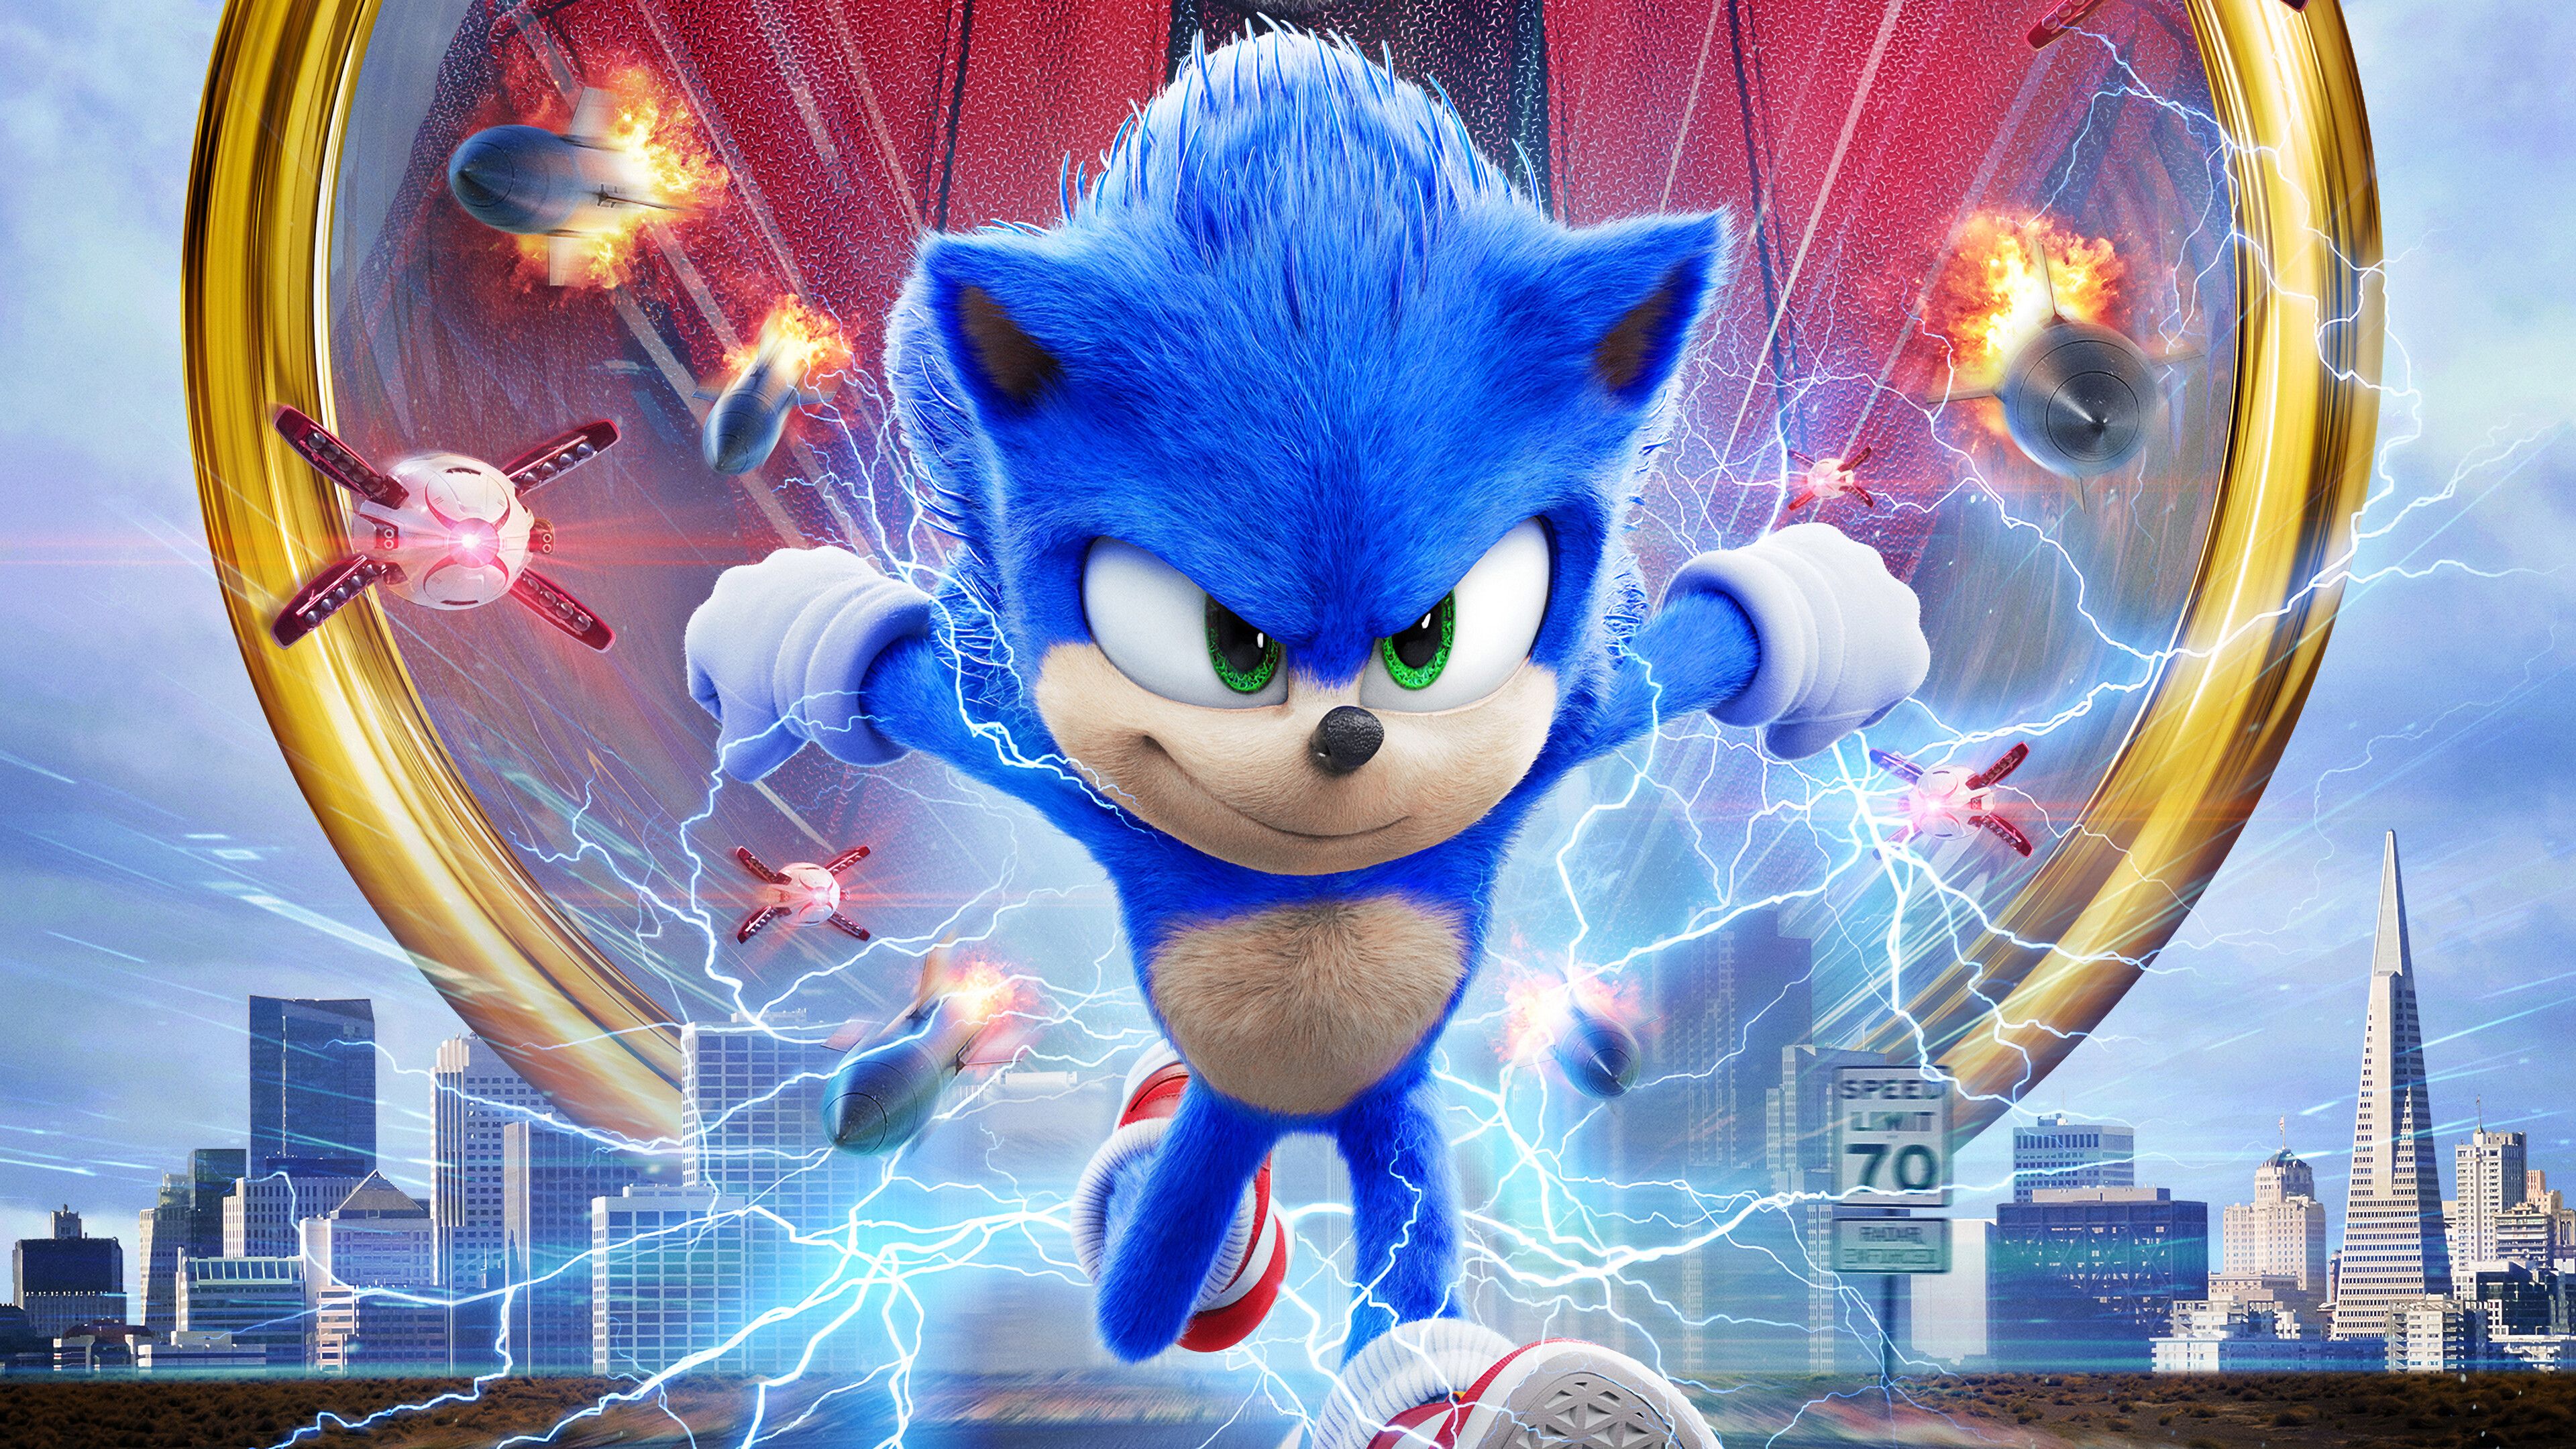 Sonic the Hedgehog Movie Poster Wallpaper 4k Ultra HD